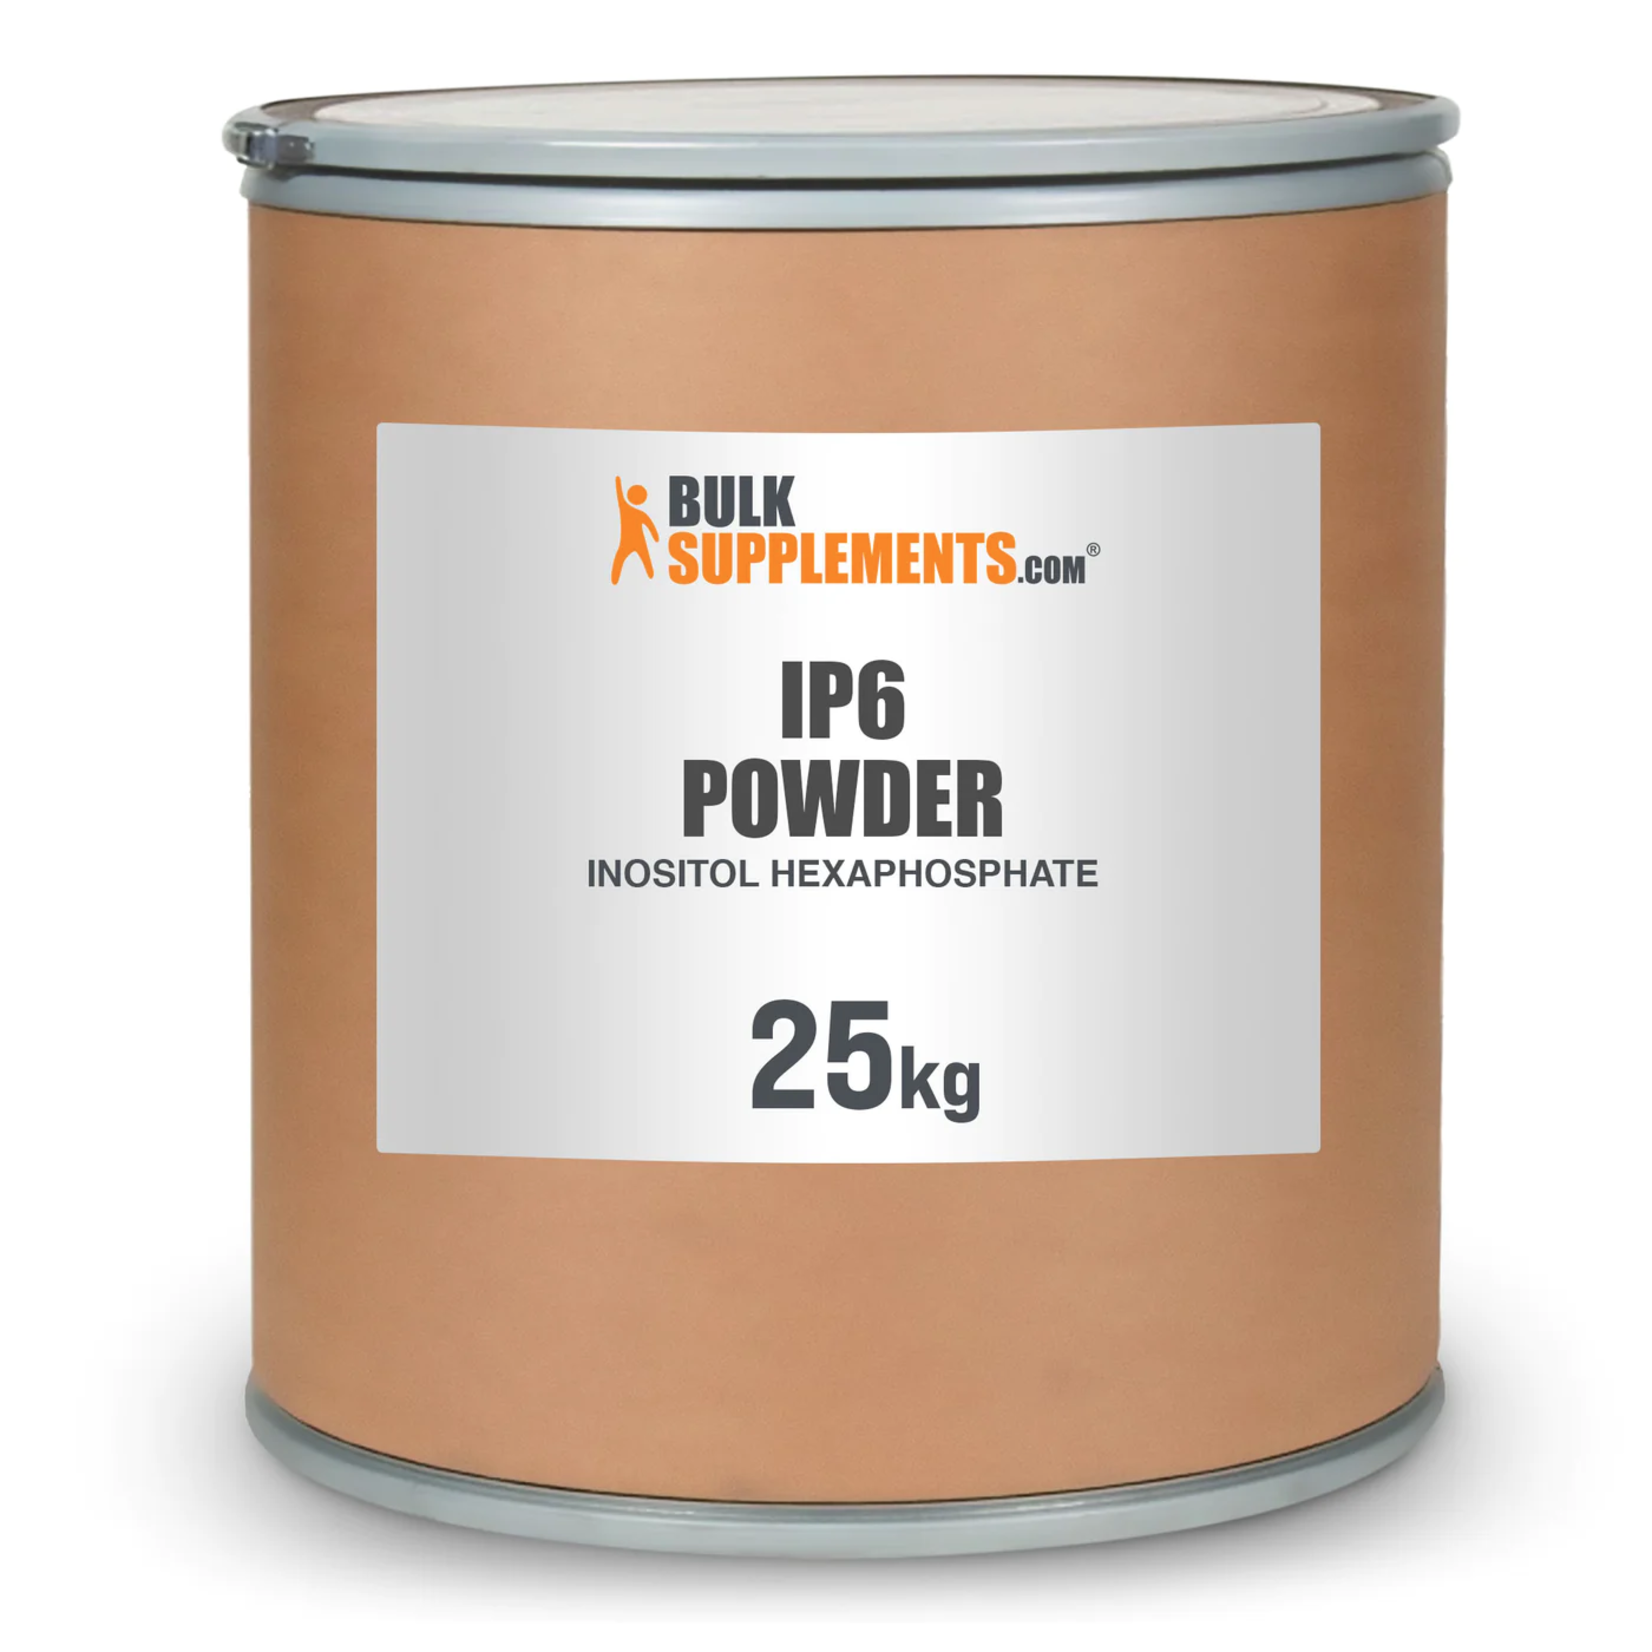 Inositol Powder - 4.5oz (Bulk Supplements) - Natures Medicinary